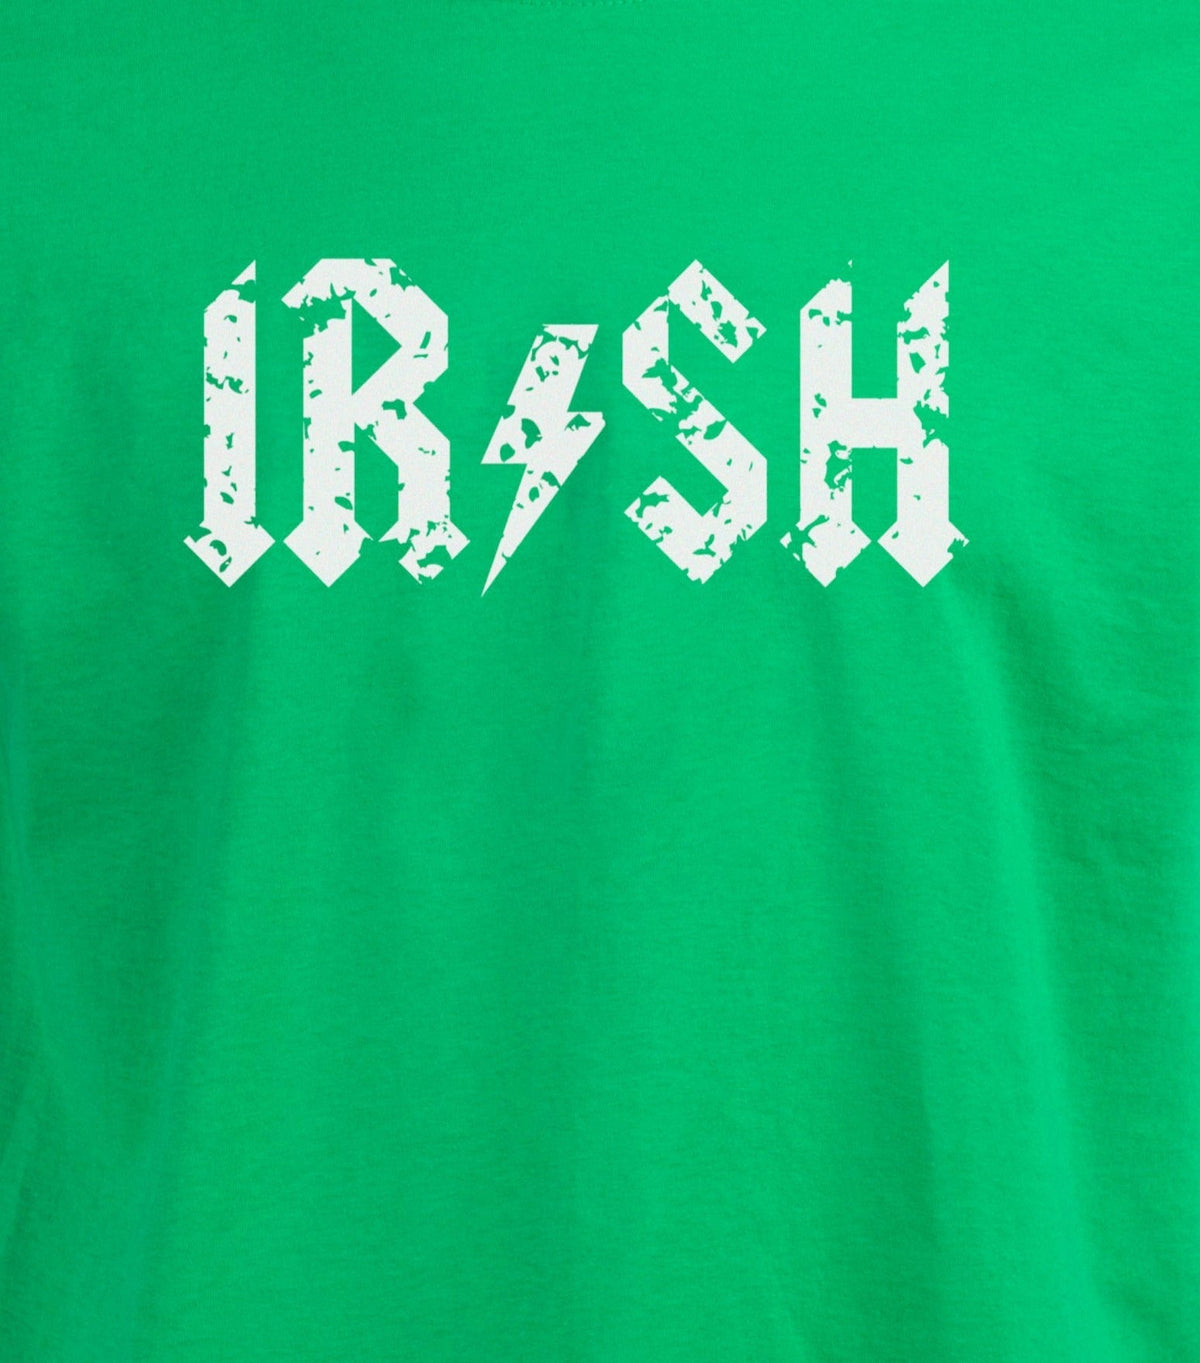 Irish Rock And Roll Style - St. Patrick's Day Irish Heritage T-shirt - Women's